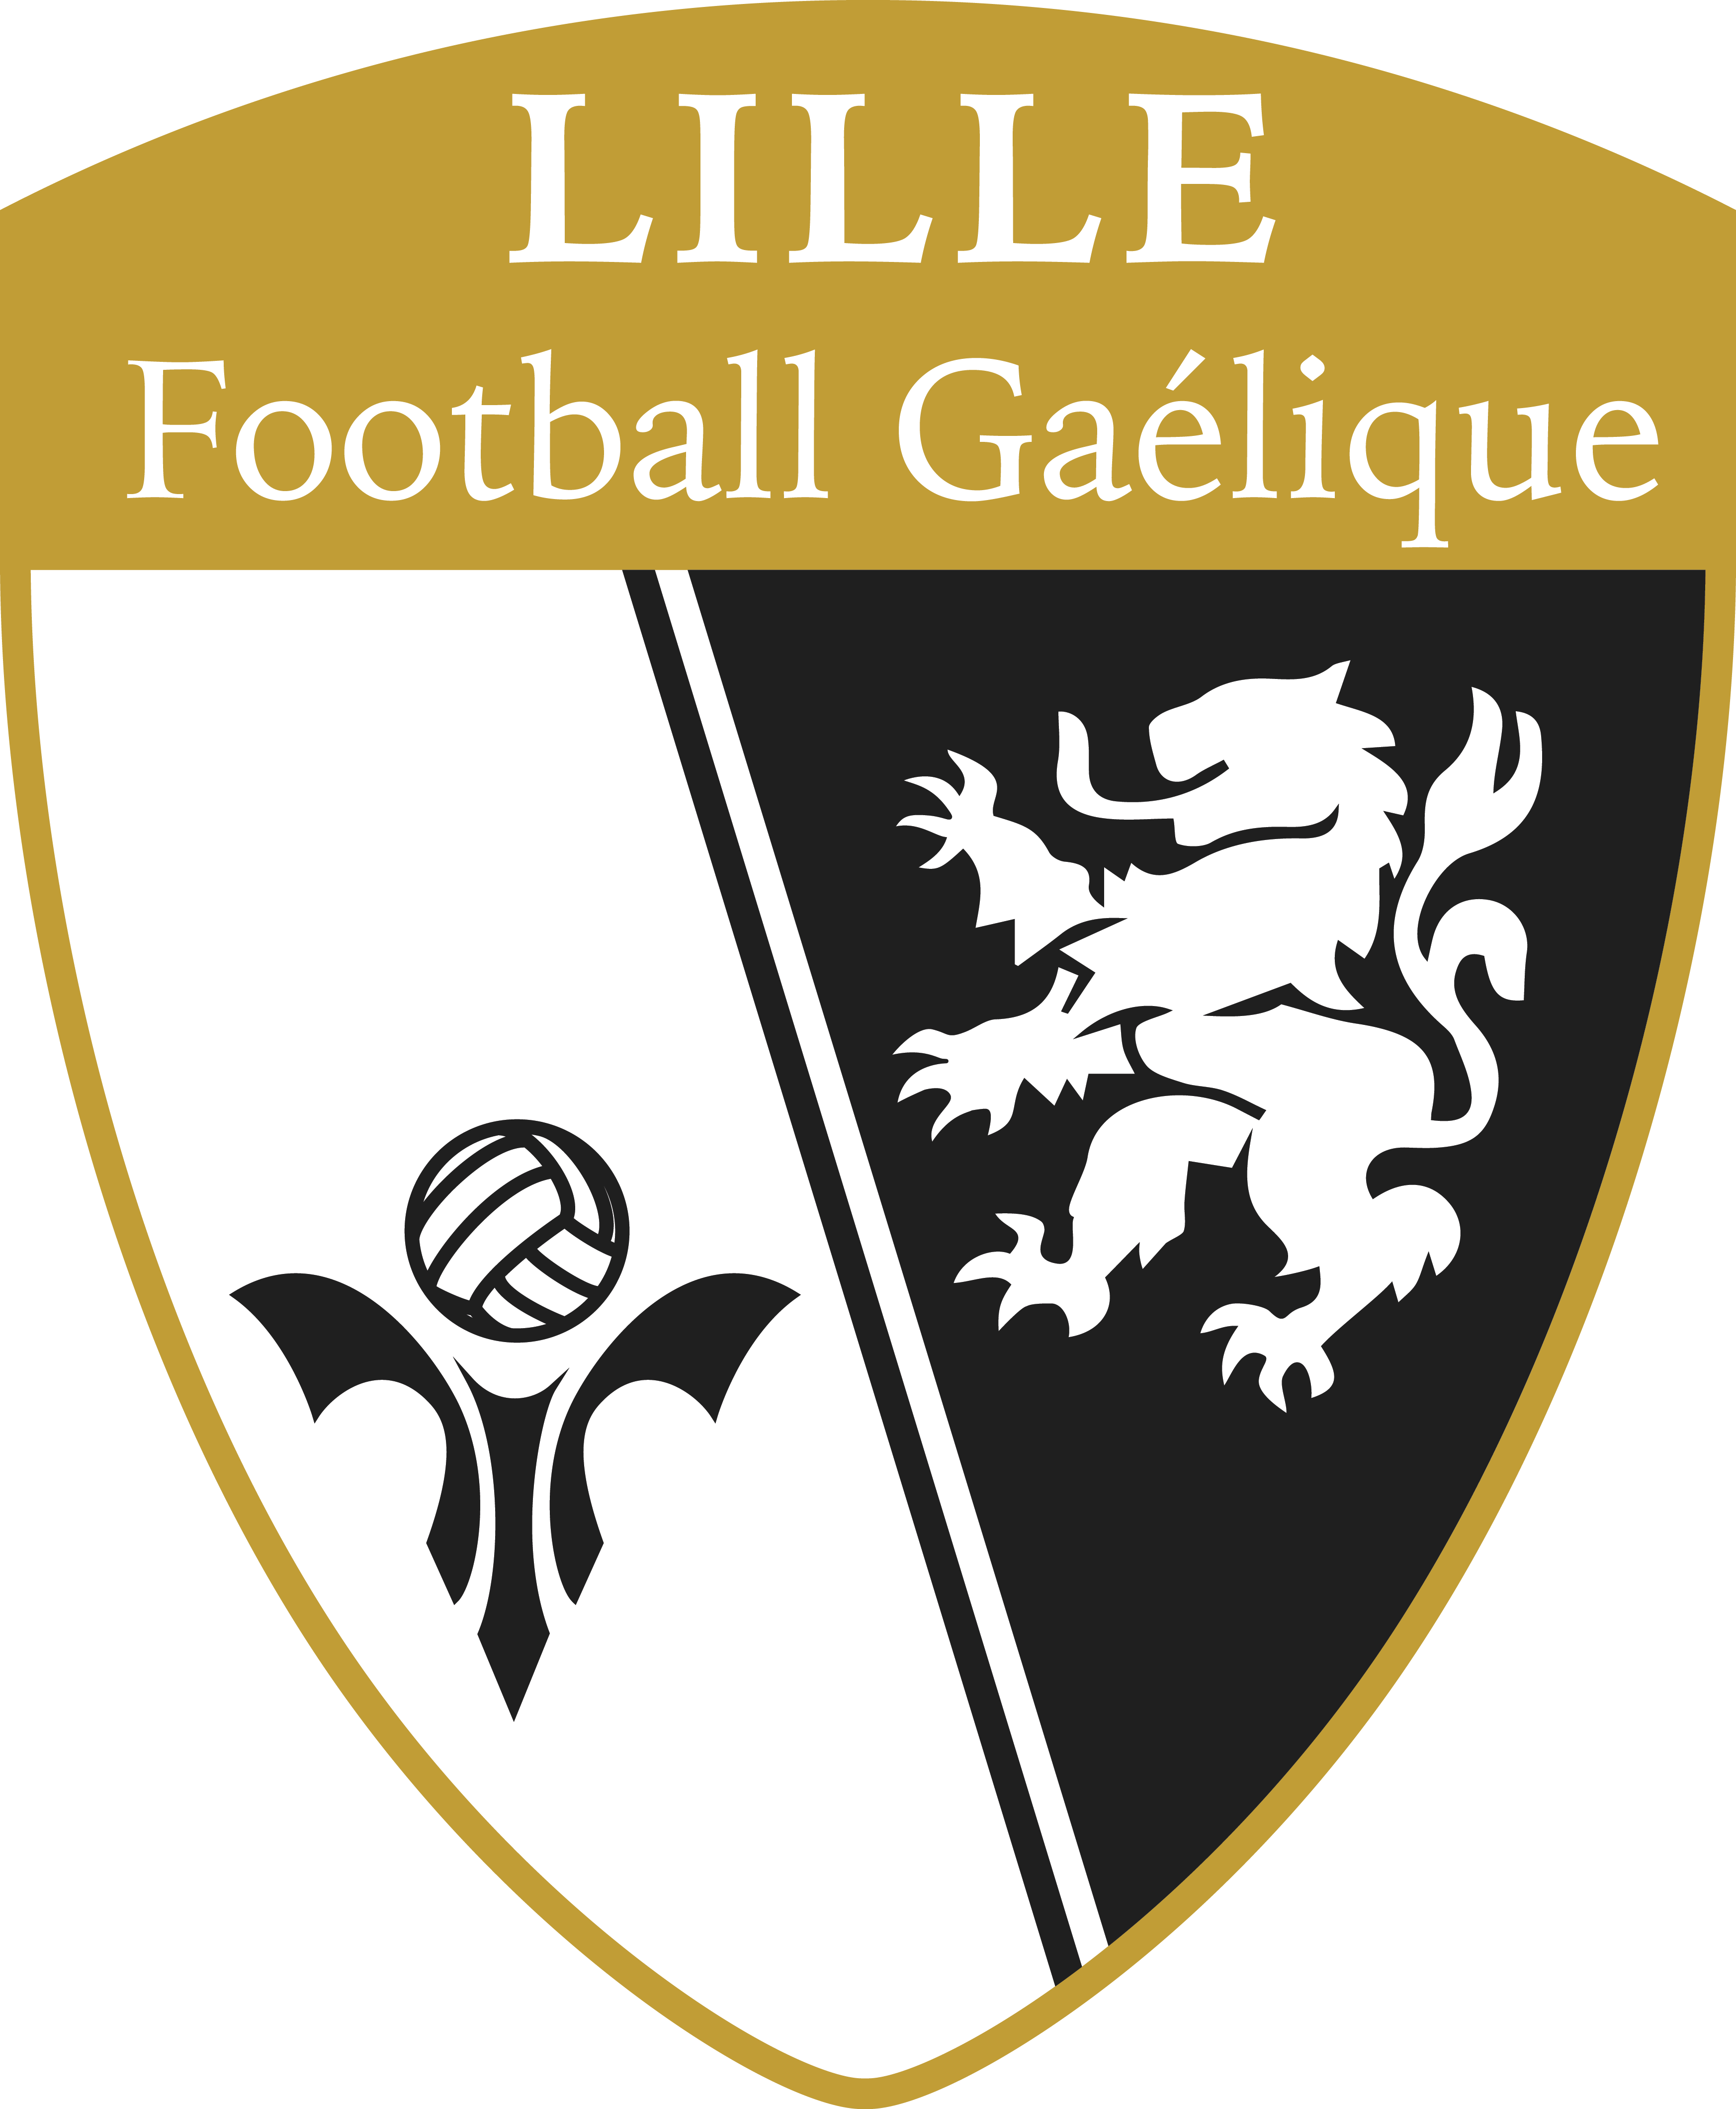 Lille Football Gaelique